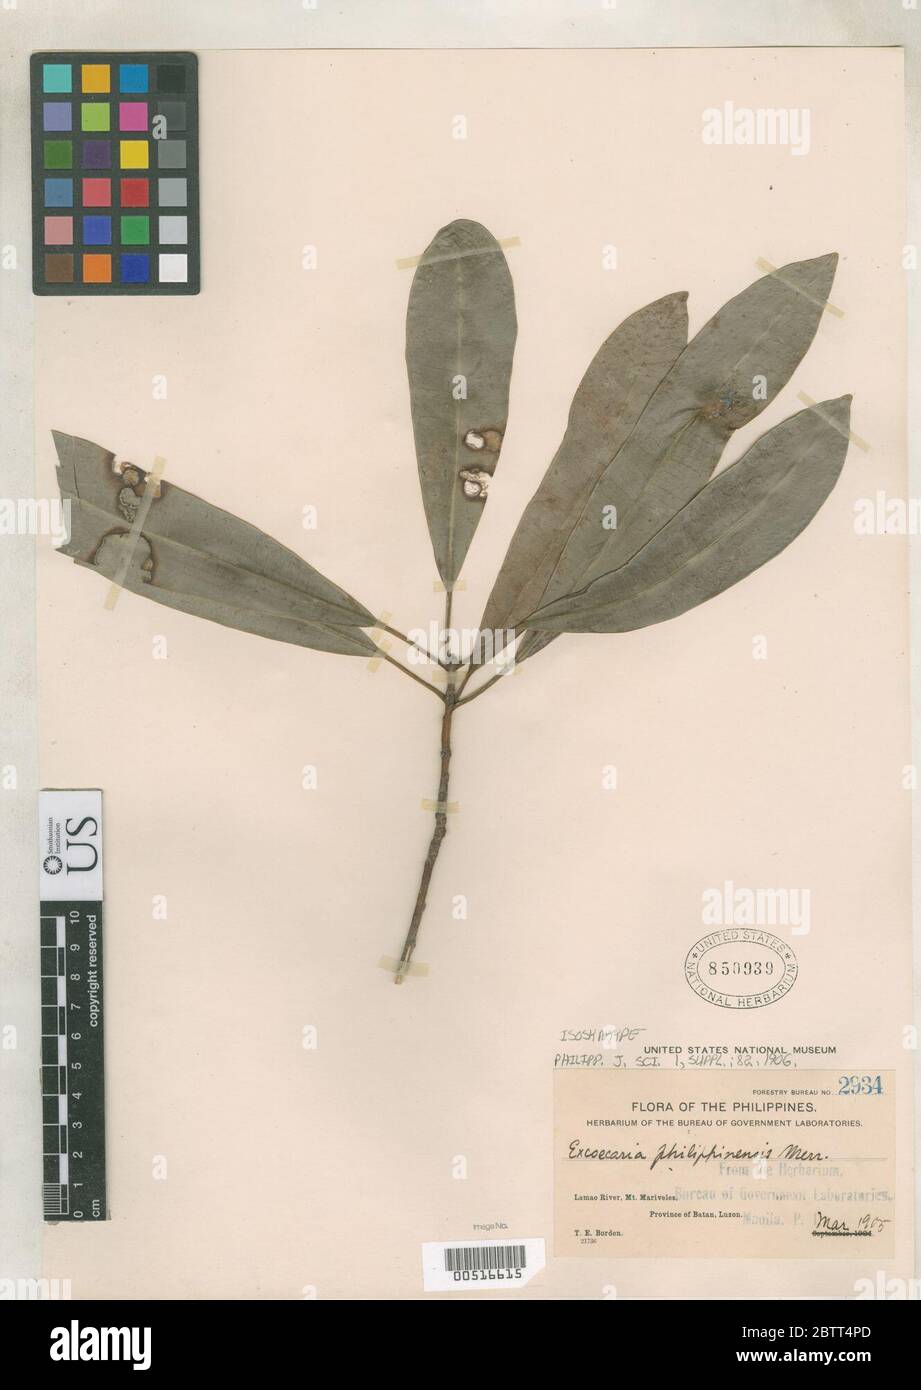 Excoecaria philippinensis Merr. Stock Photo